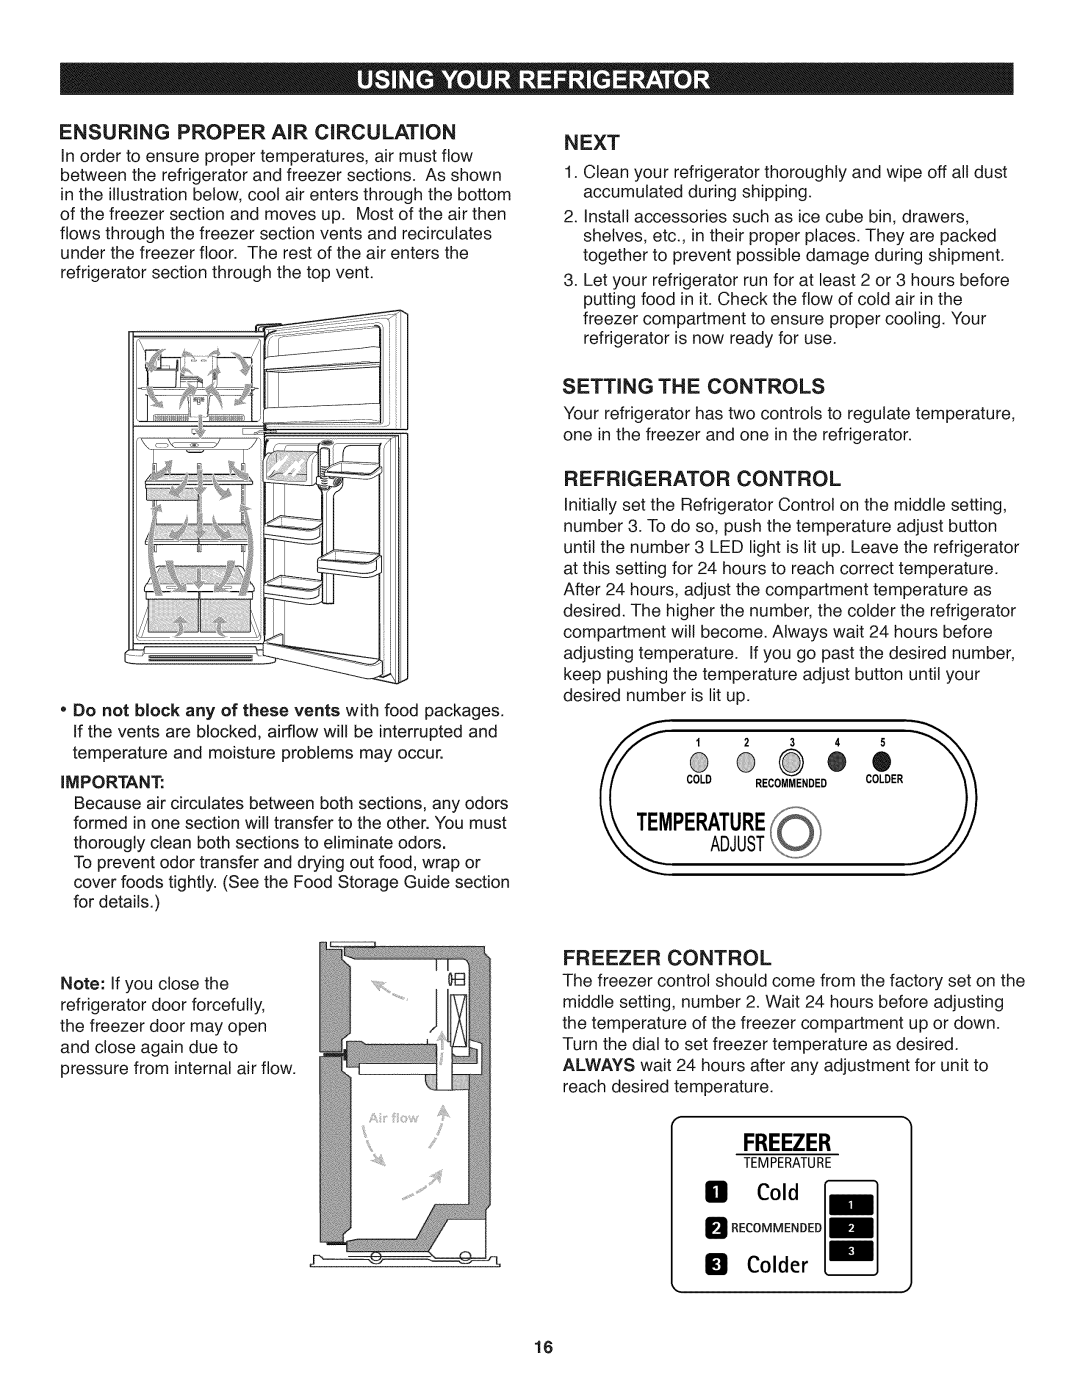 Kenmore 795.6991 Freezer, ENSURING PROPER AiR CiRCULATiON, Next, Setting The Controls, Refrigerator Control, I 1 Colder 